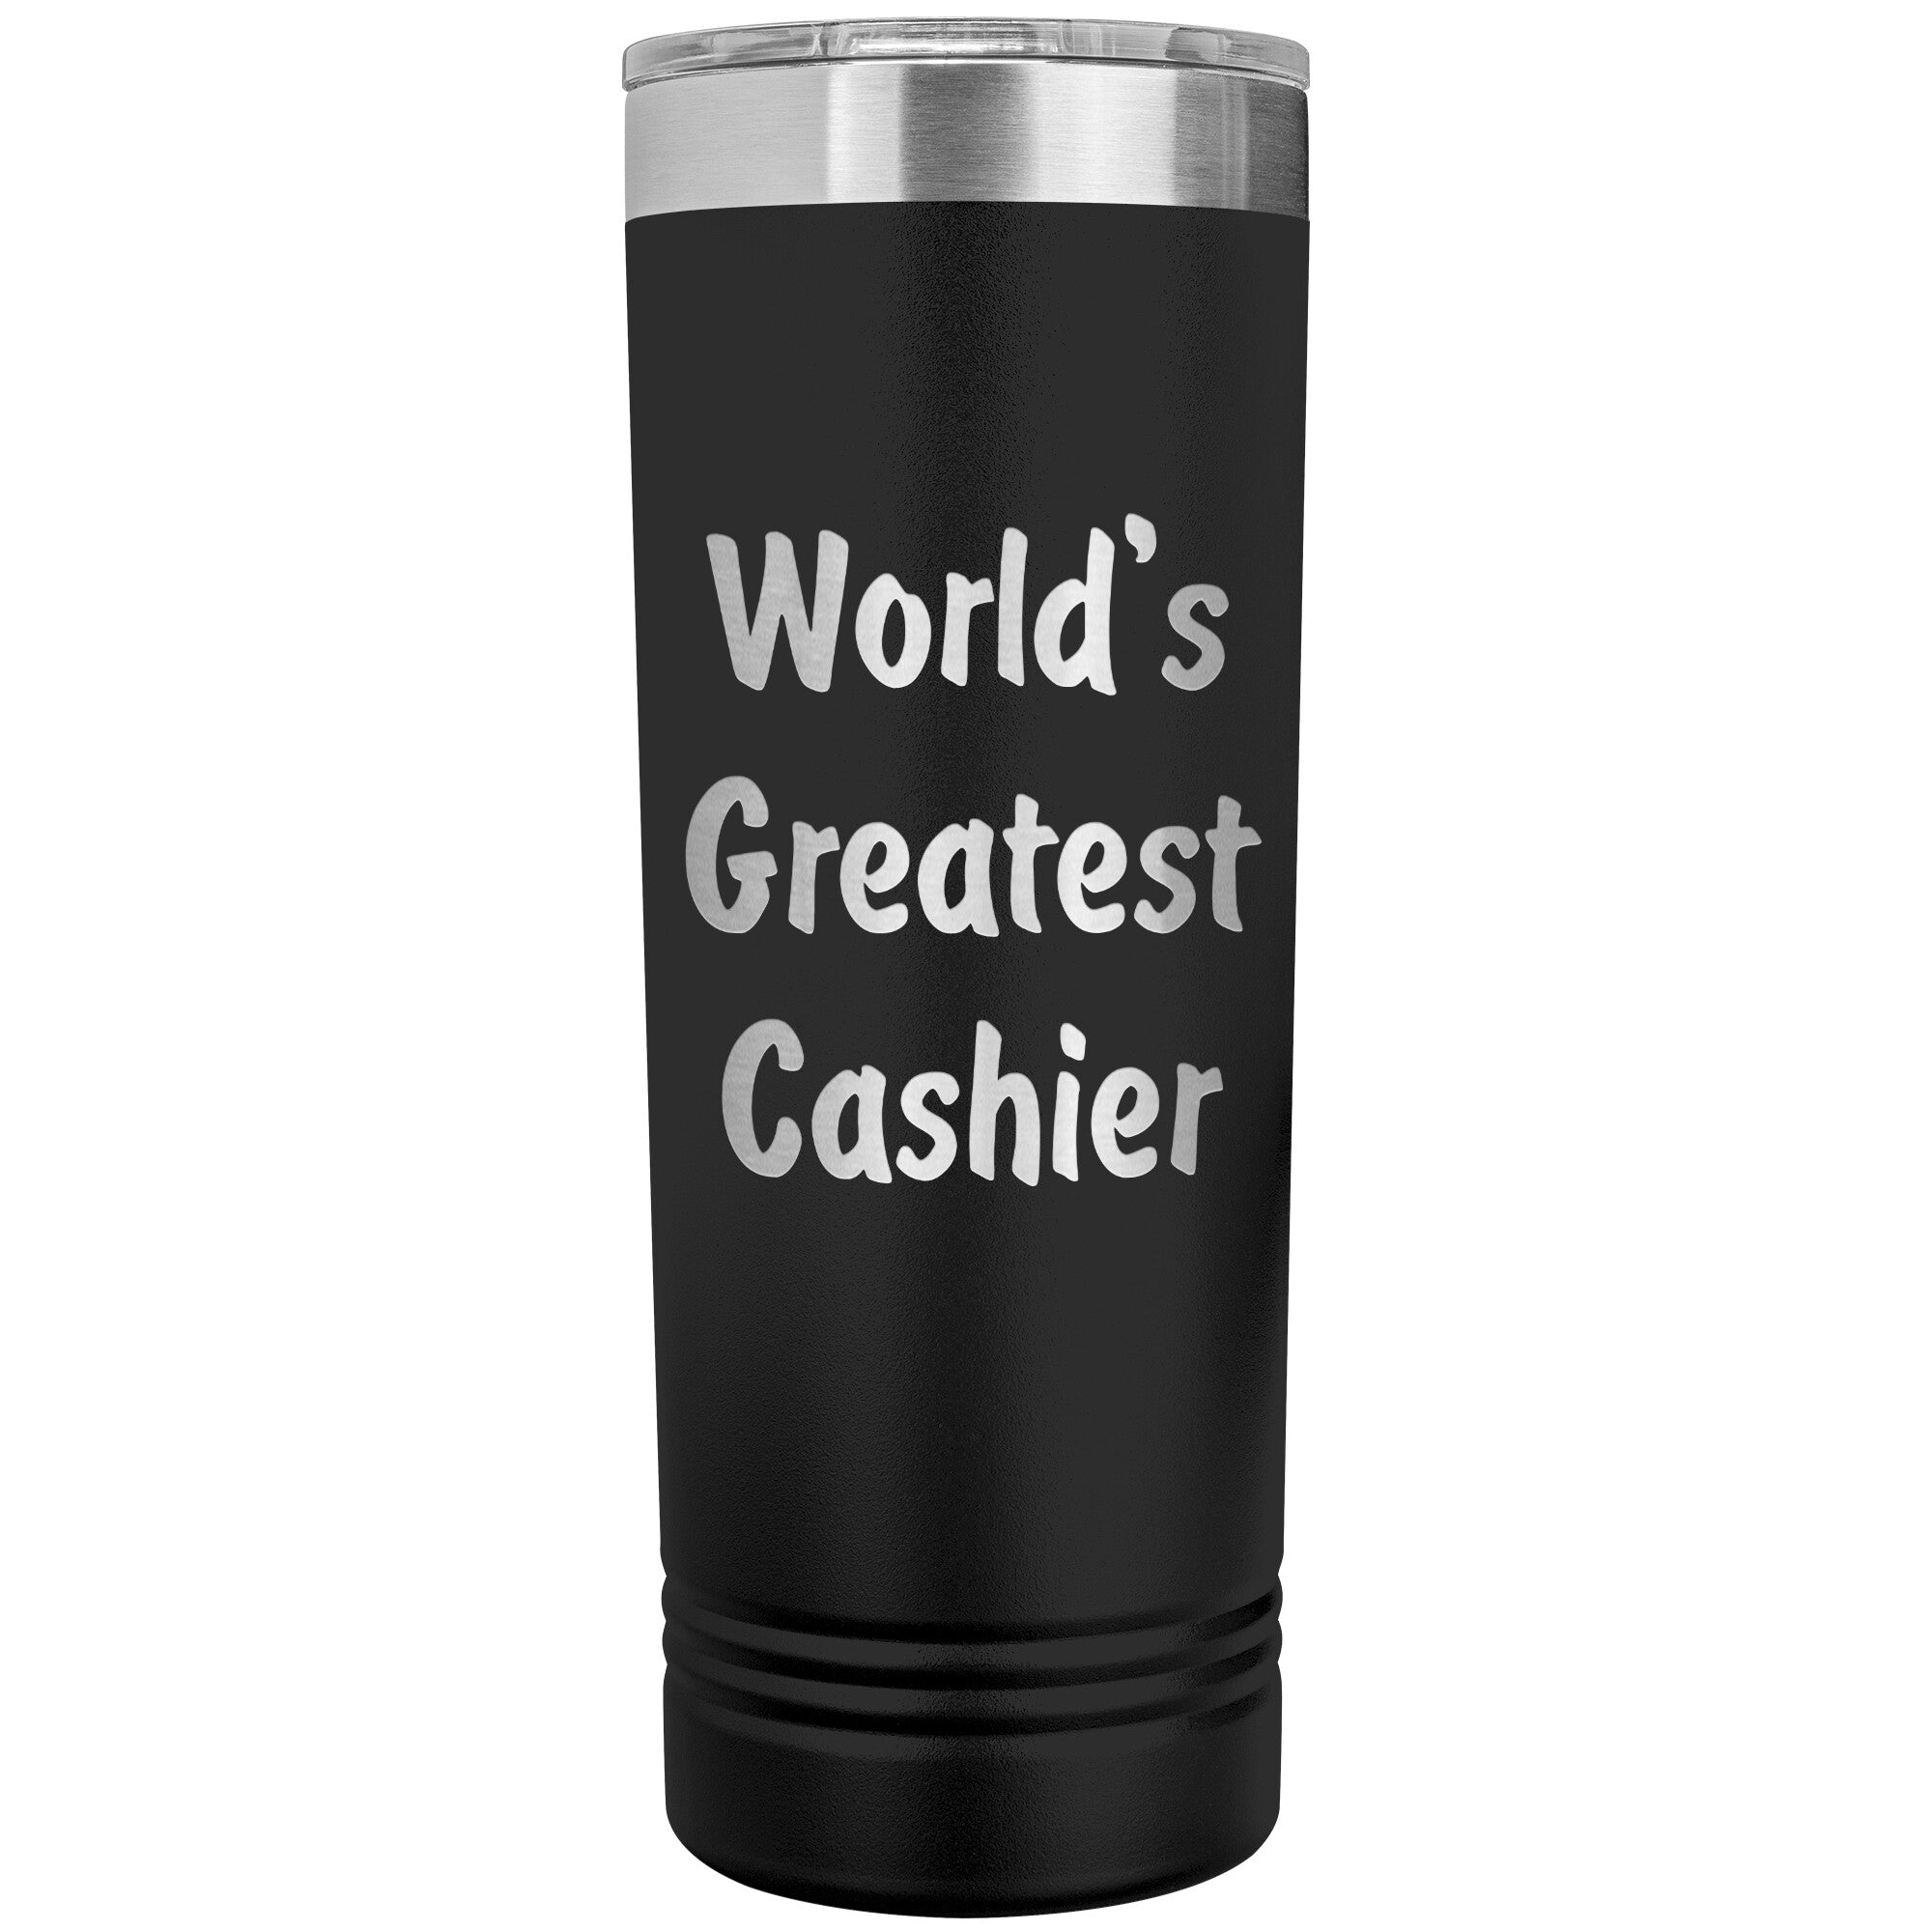 World's Greatest Cashier - 22oz Insulated Skinny Tumbler